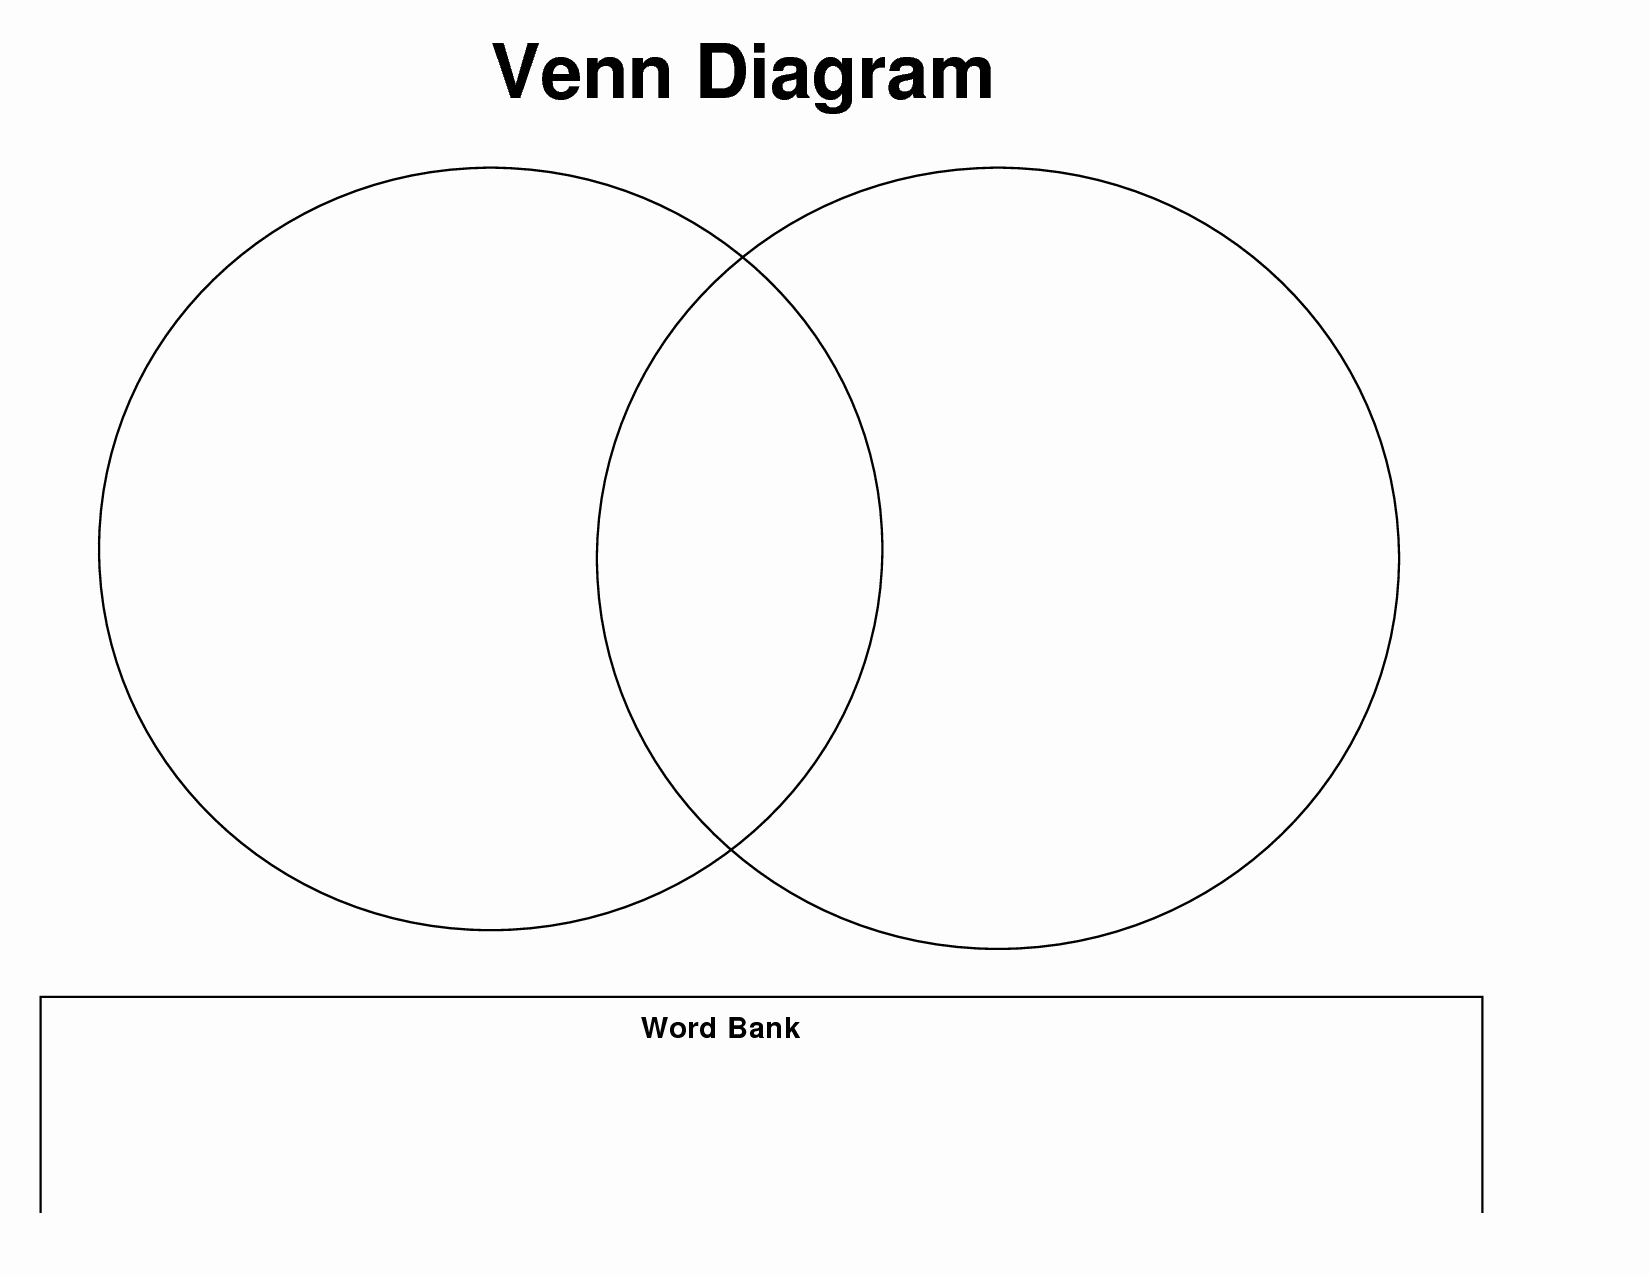 Venn Diagram Template Word Elegant Templates for Venn Diagrams Microsoft Word Spainnews